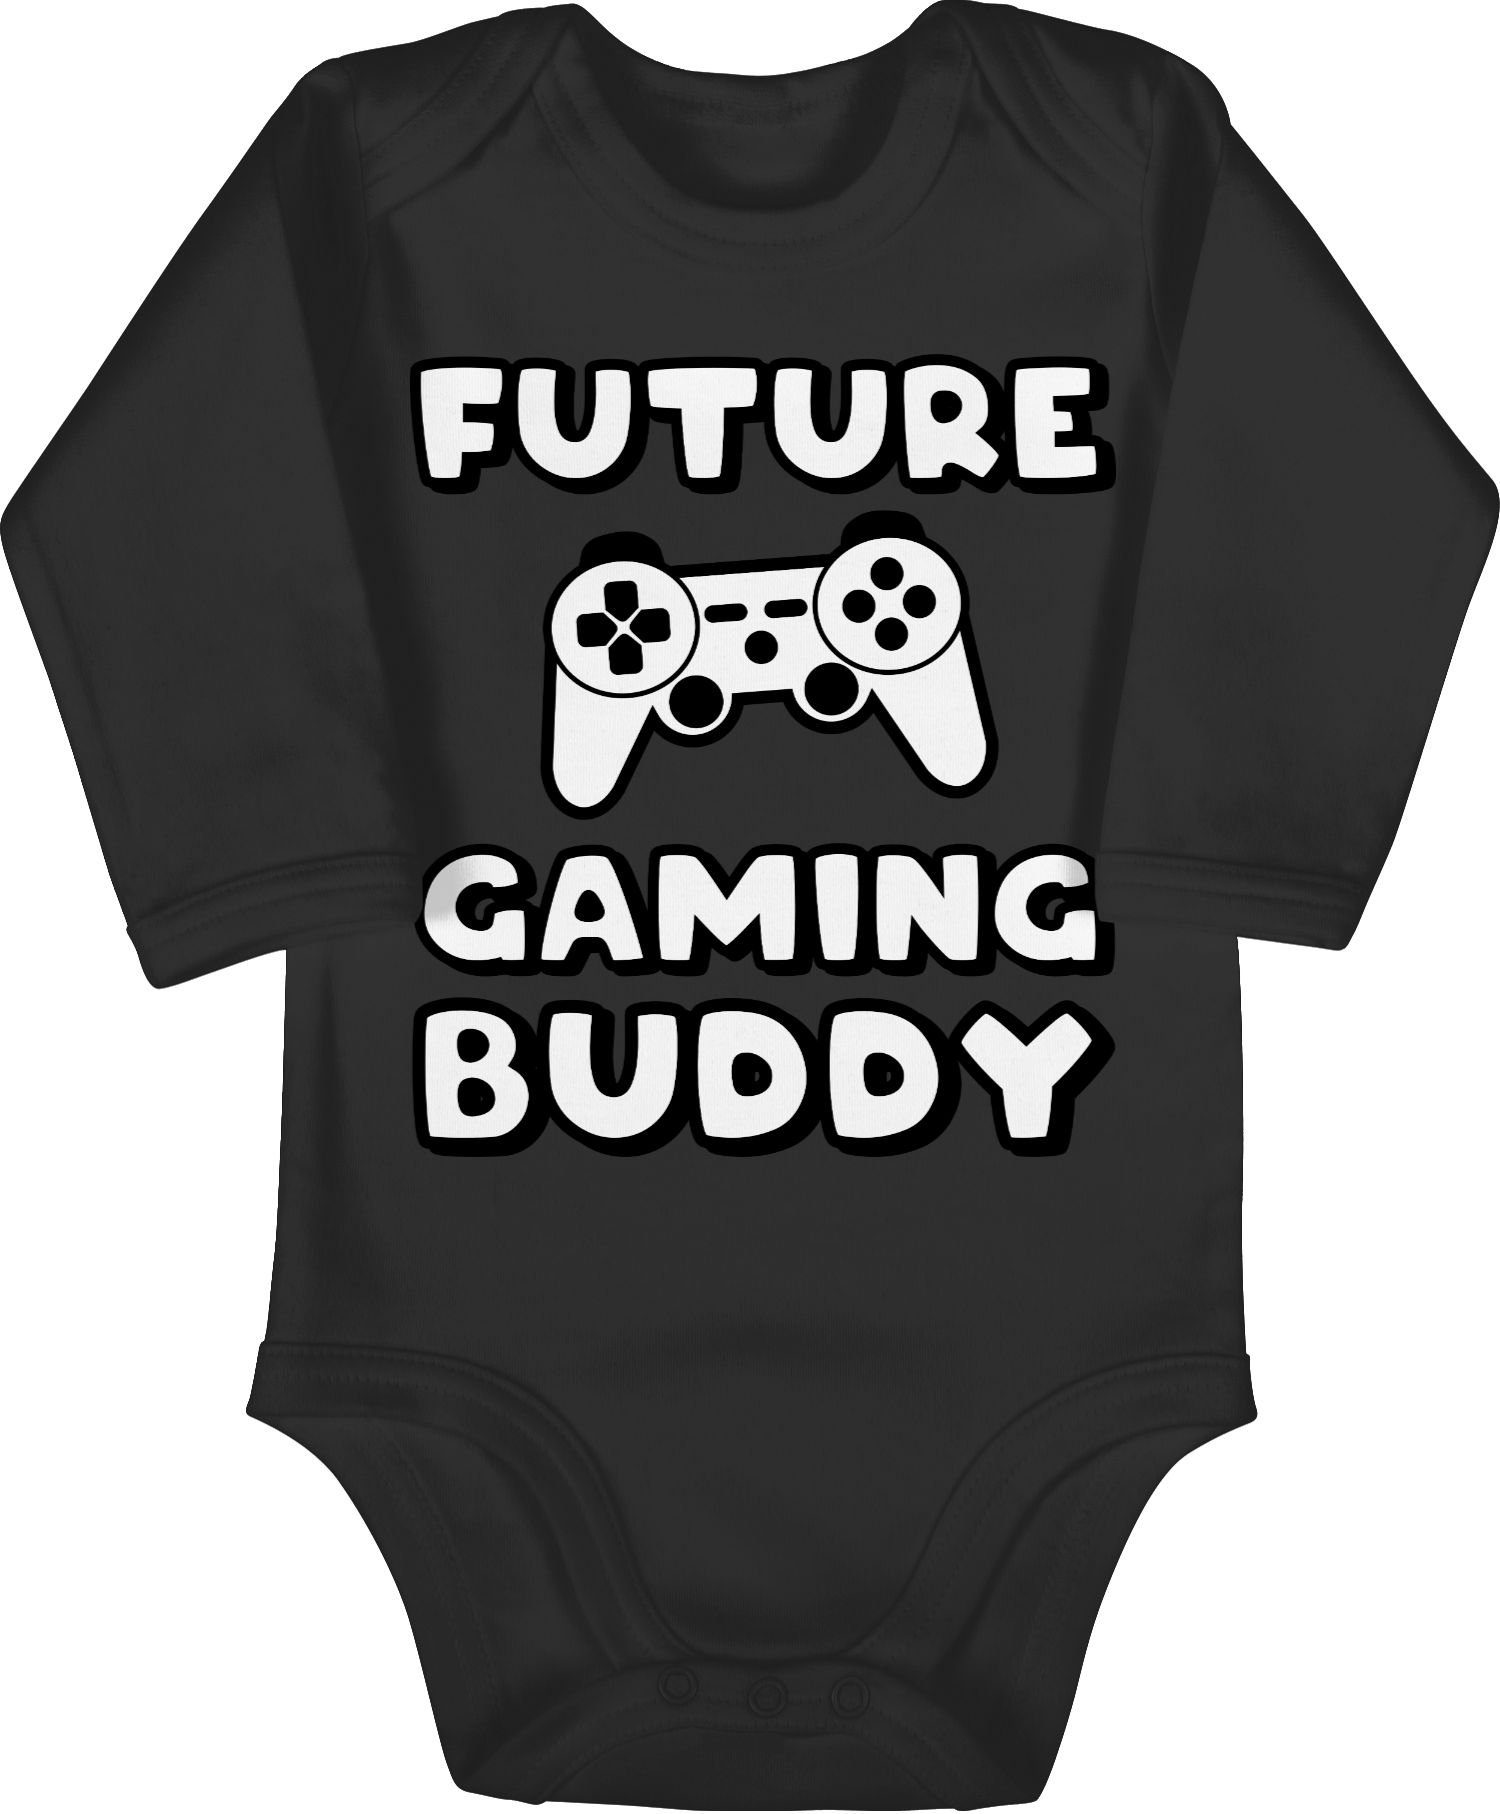 1 Shirtracer Shirtbody Schwarz Sprüche Gaming Baby Buddy Future